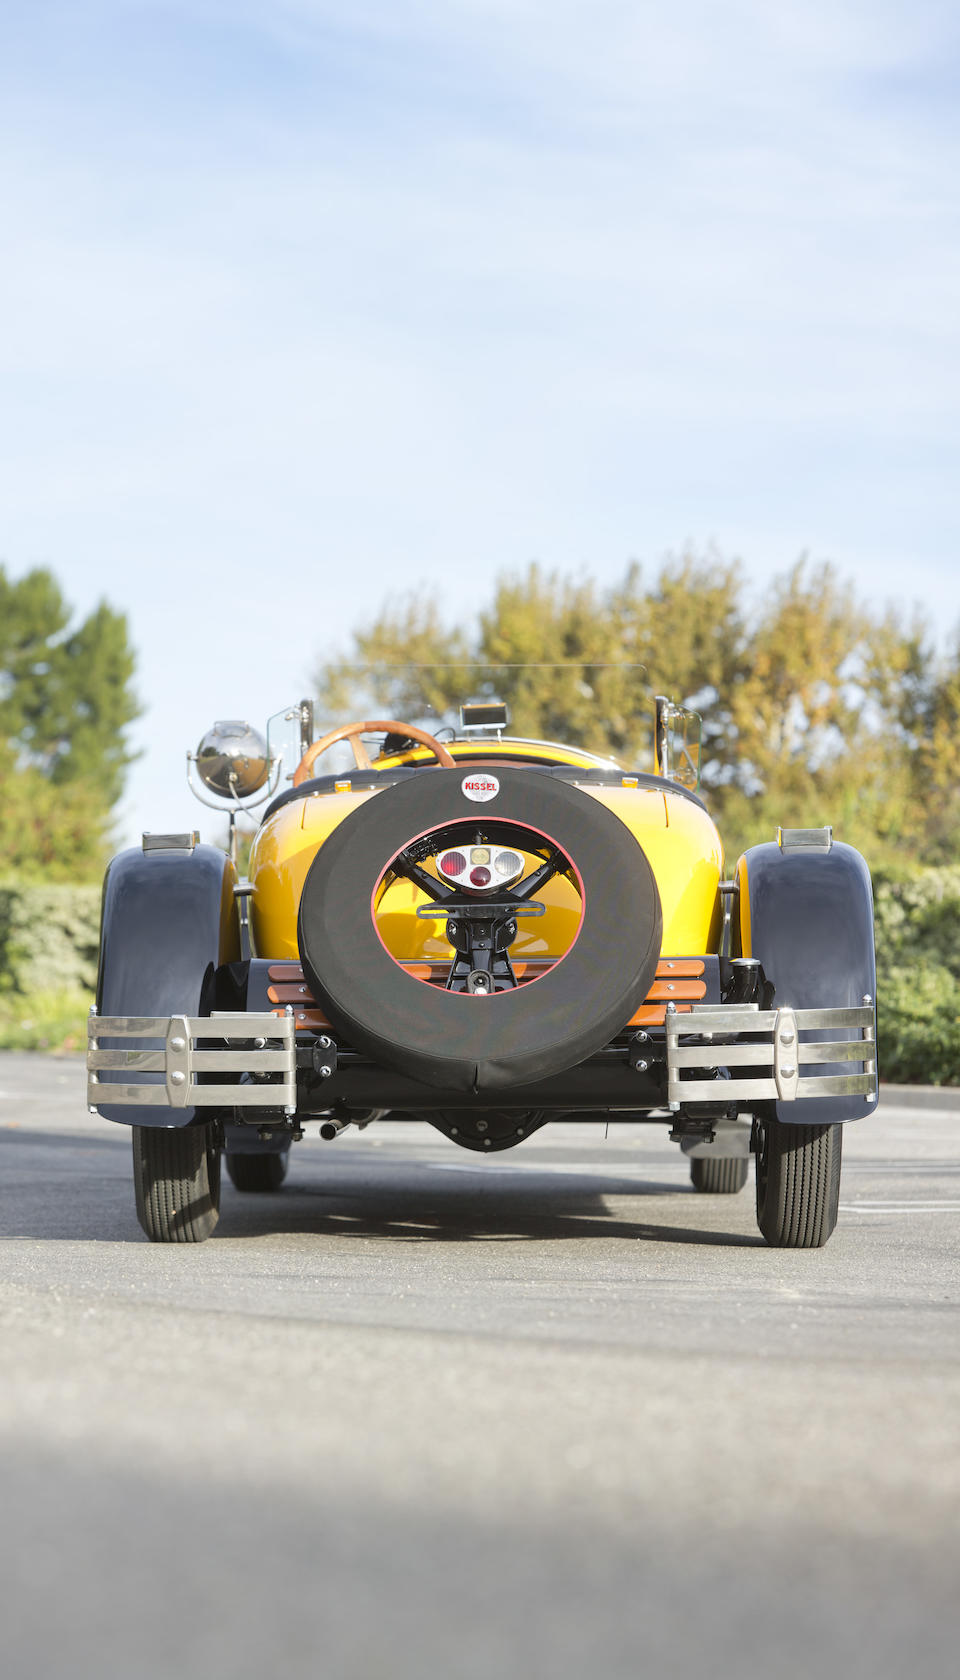 Ex-Stanford Block,1926 Kissel 6-55 Gold Bug Speedster  Chassis no. 5513231 Engine no. 55-13294